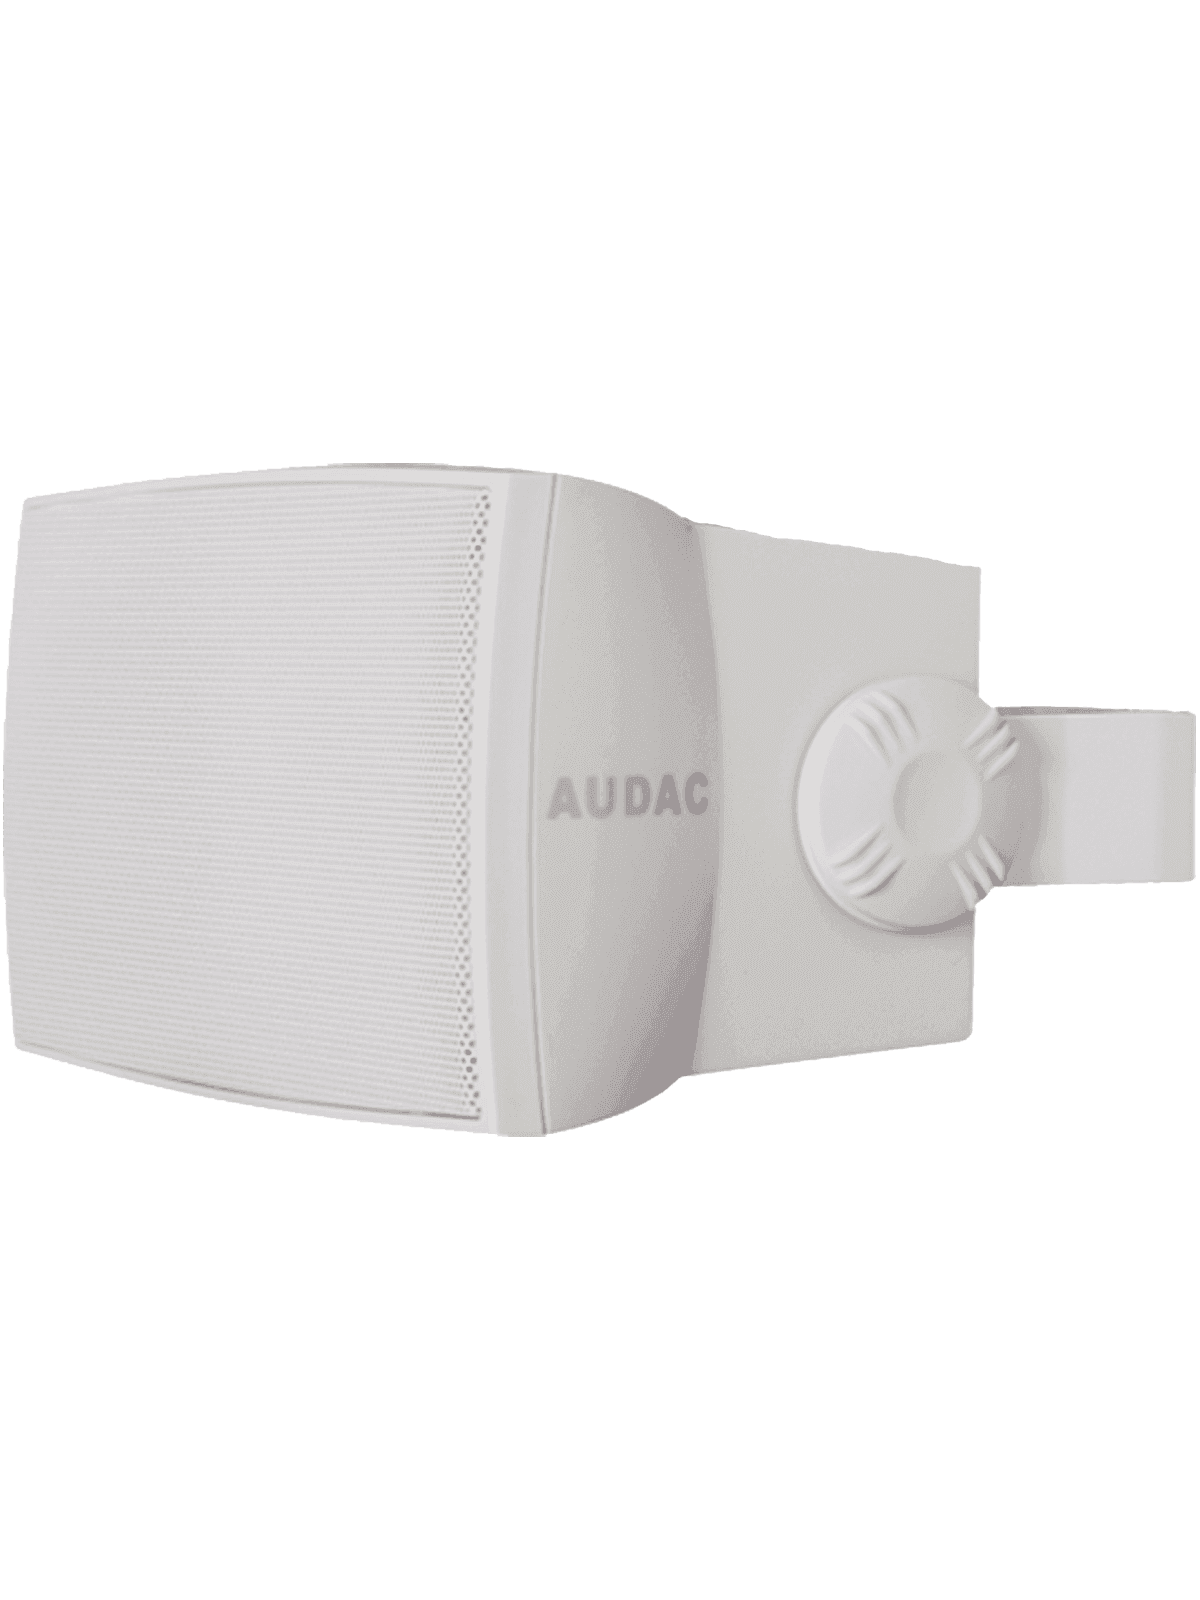 Audac - WX502MK2-OW IP55 Blanche